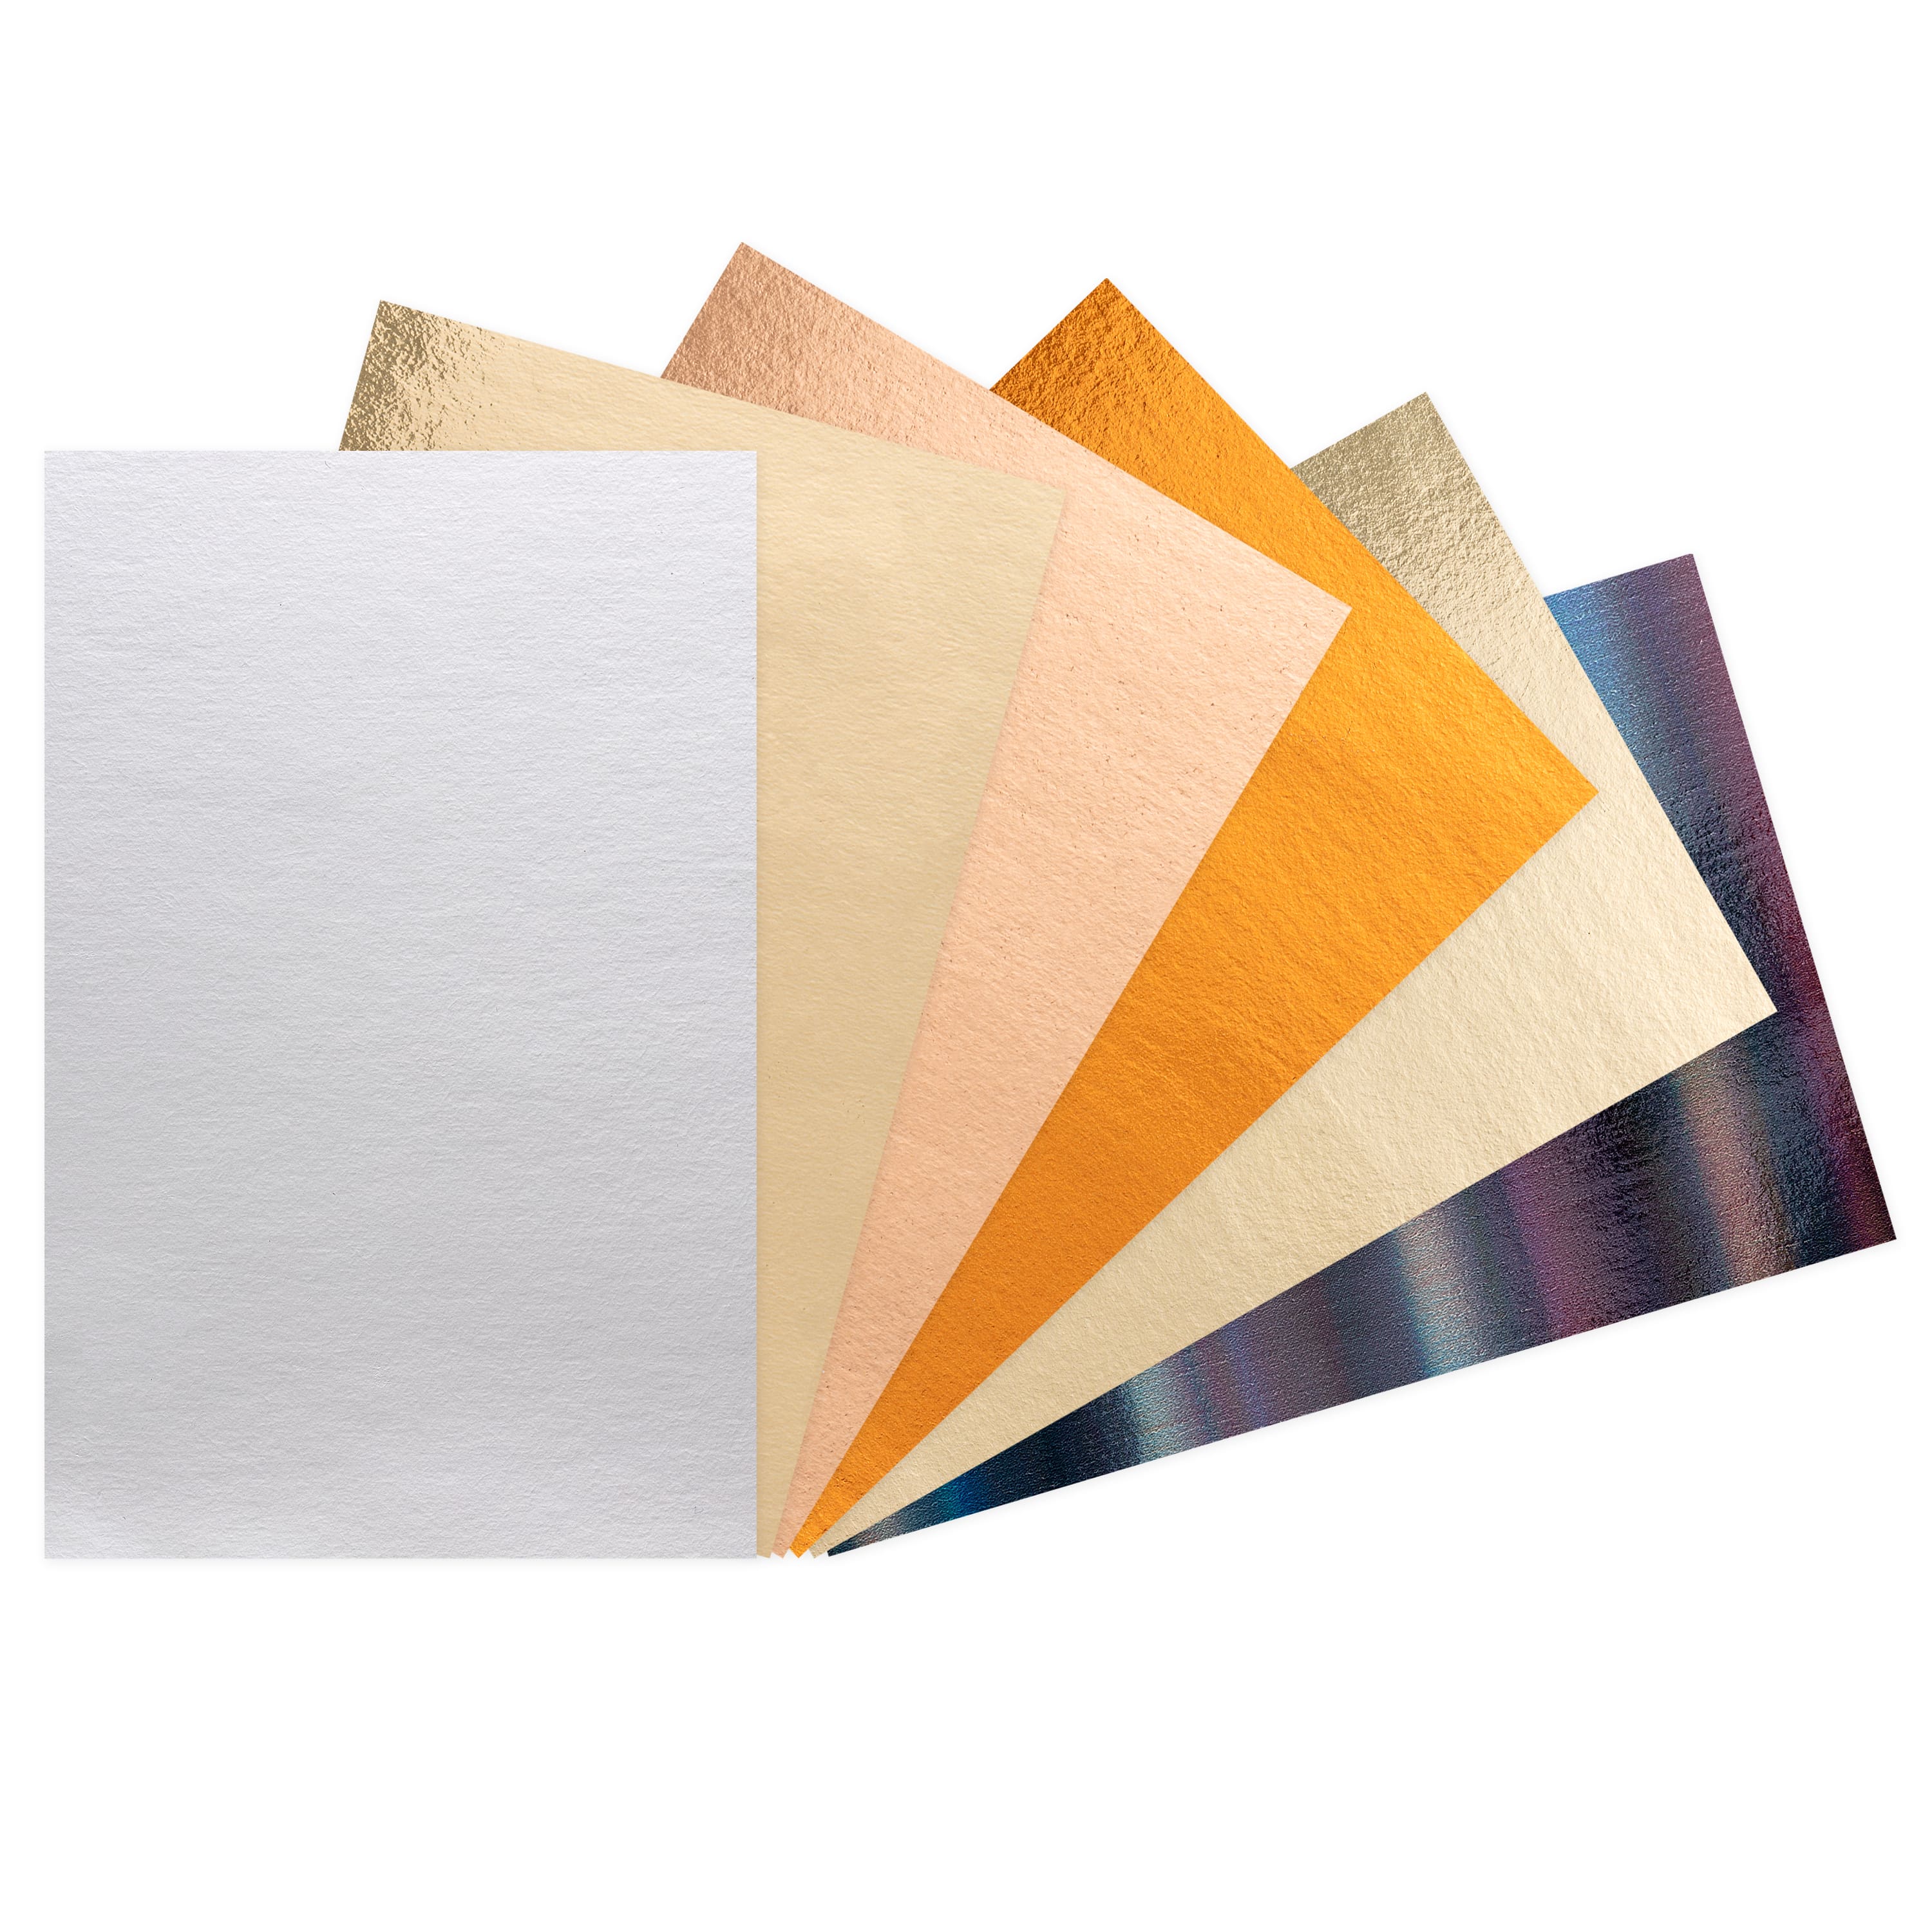 6 Packs: 48 ct. (288 total) Primary Foil Cardstock Paper Value